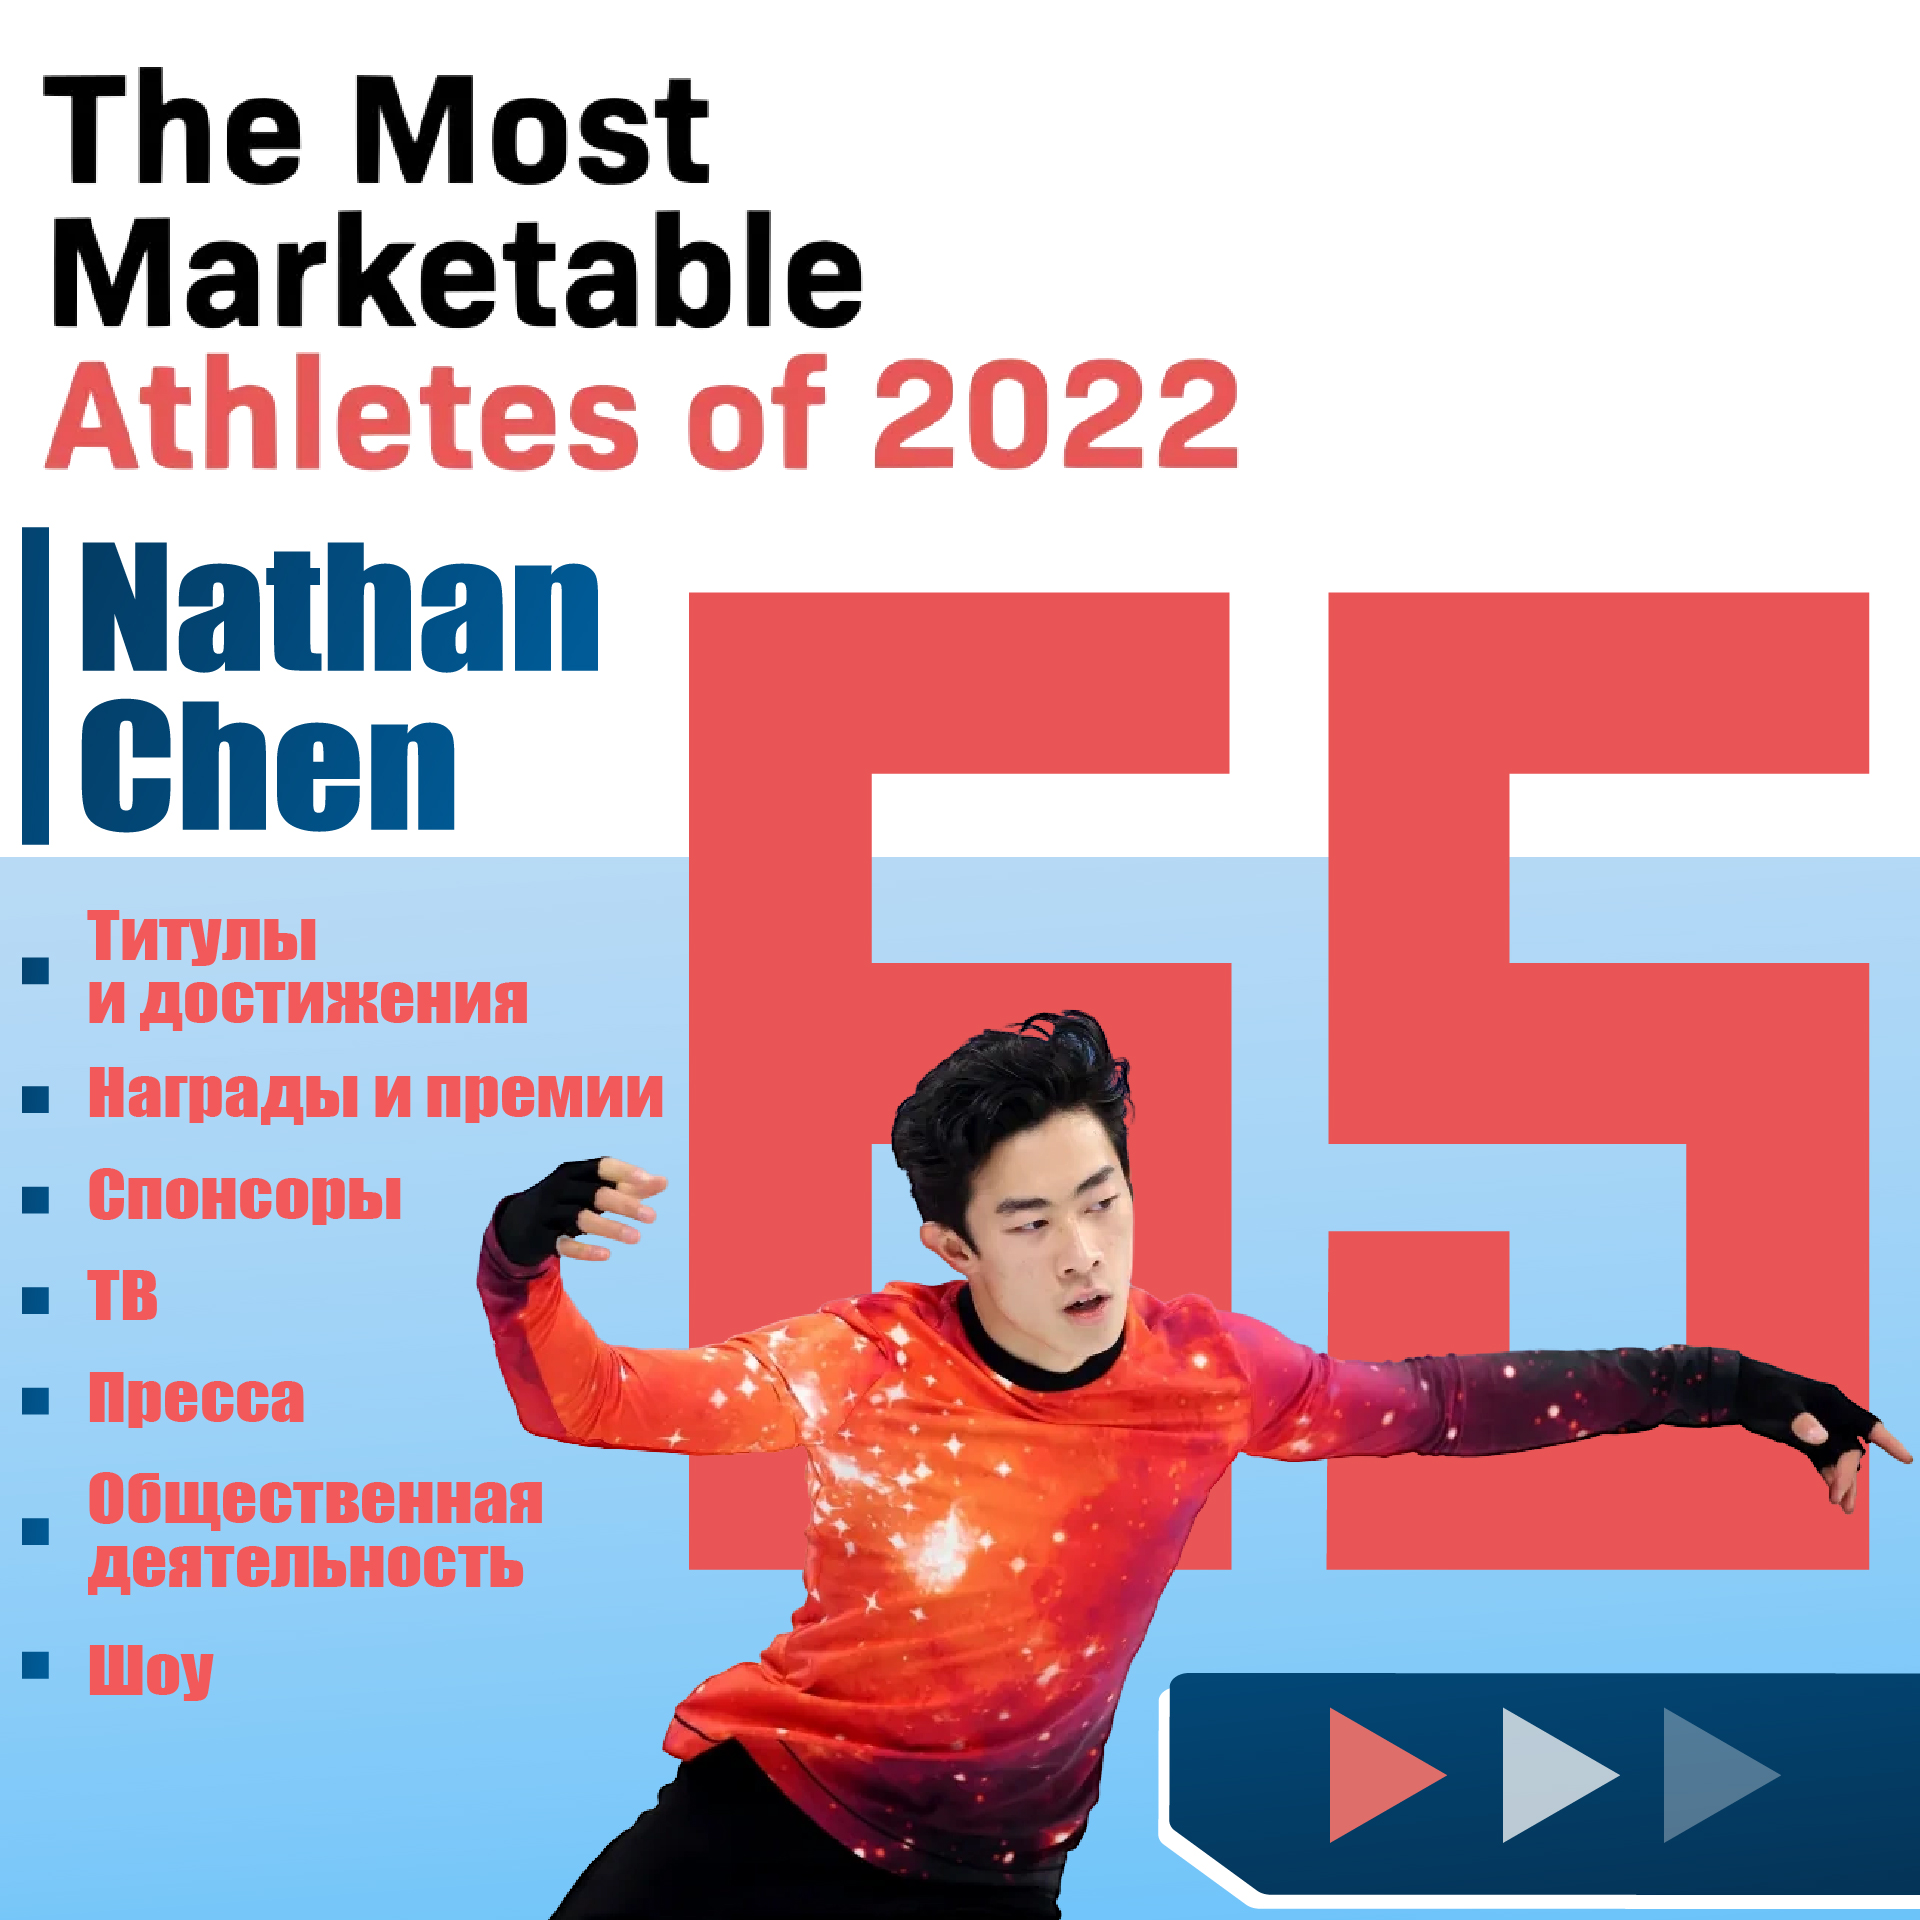 Нэтан Чен, мужское катание, Олимпиада-2022, сборная США